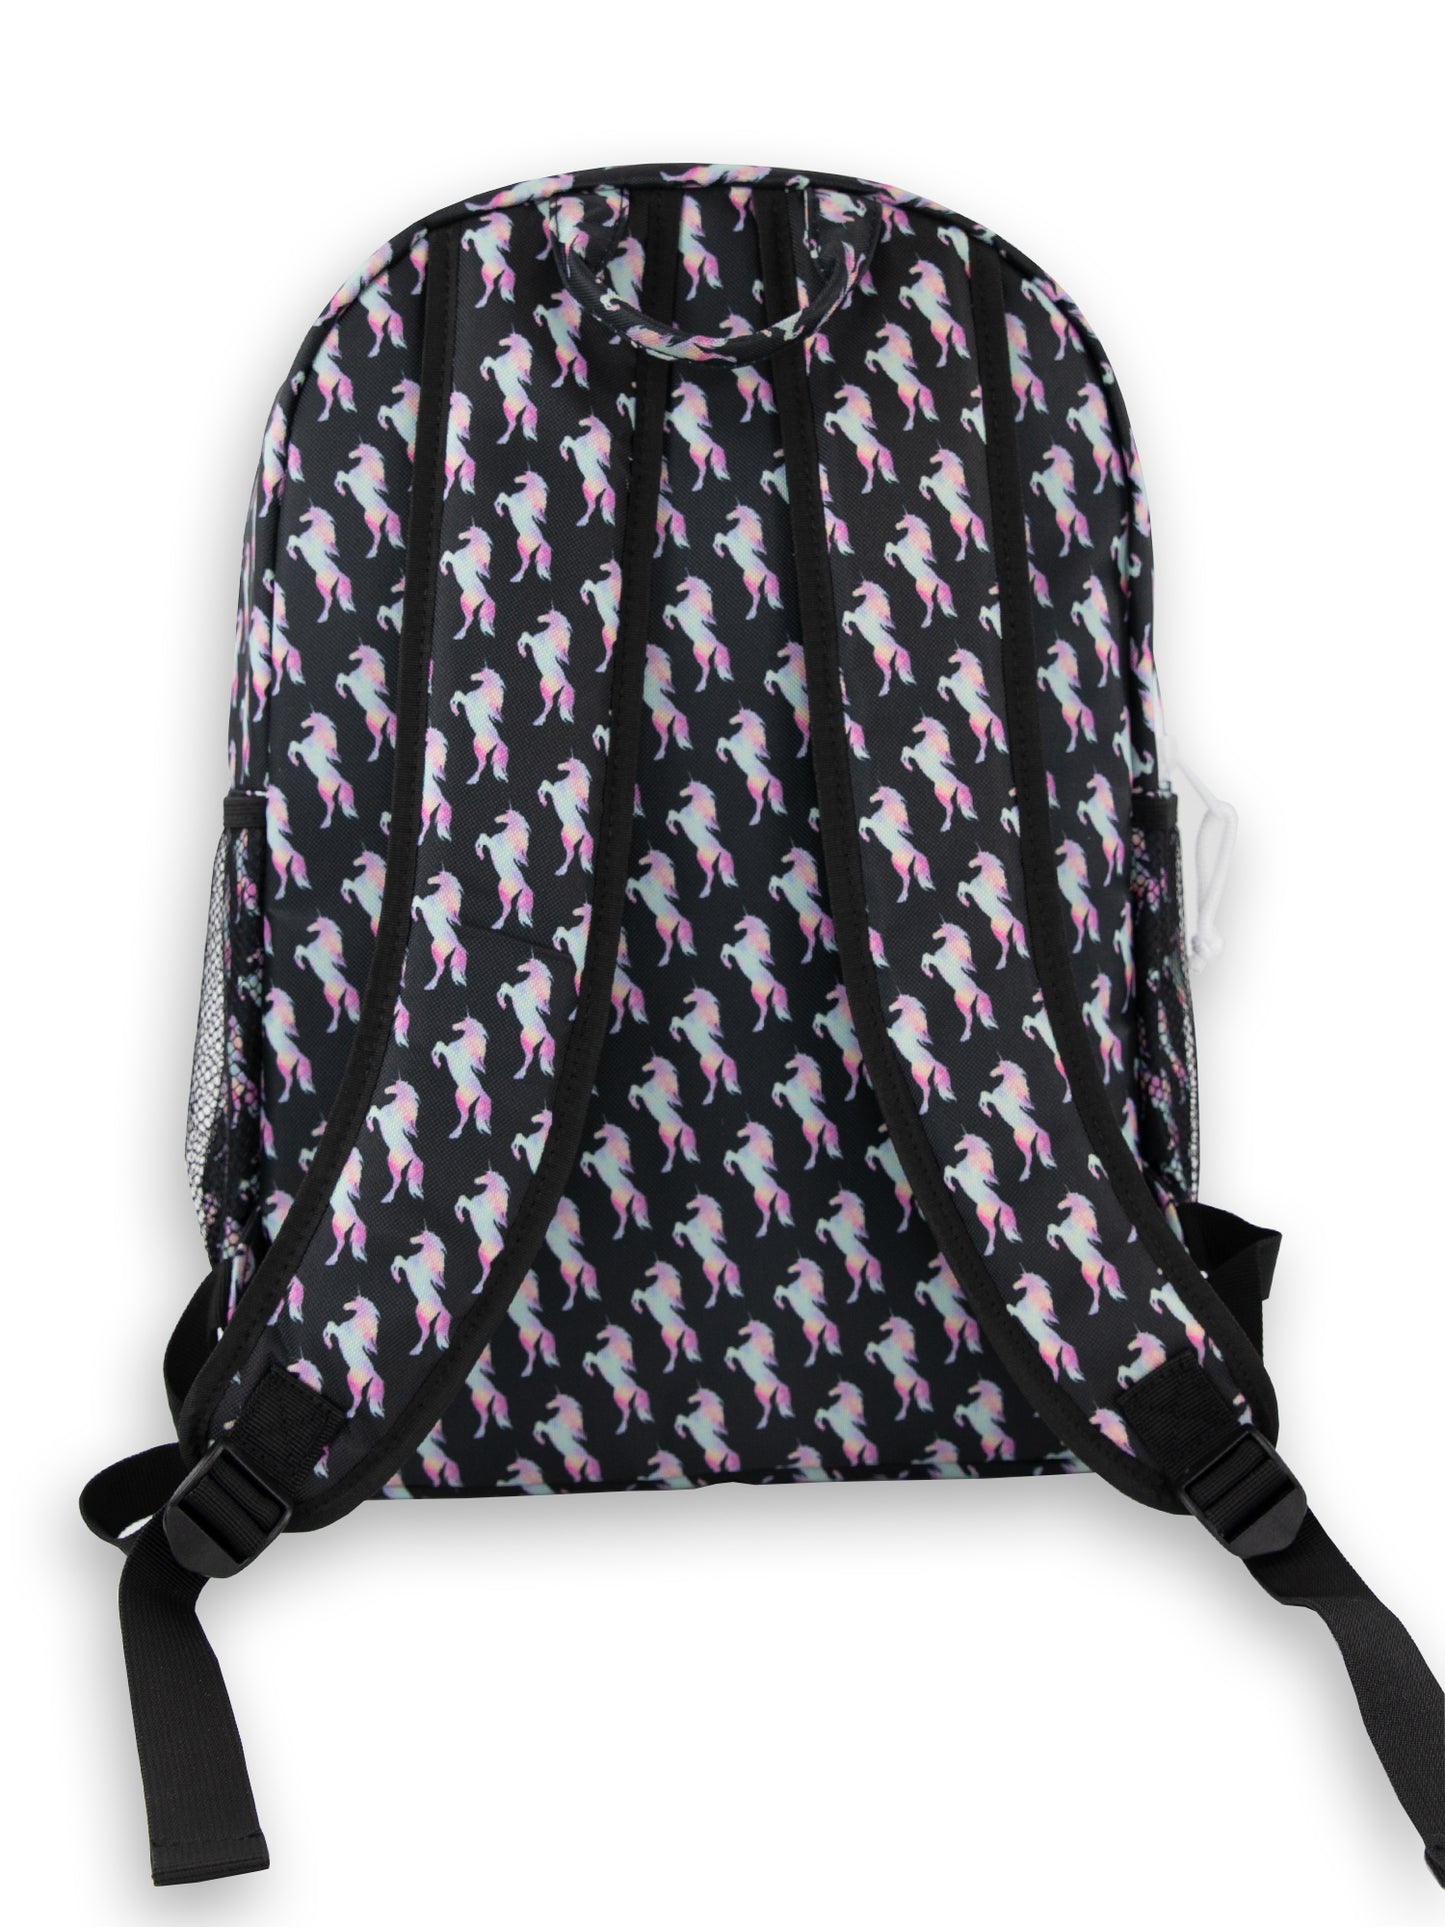 Logan Backpack